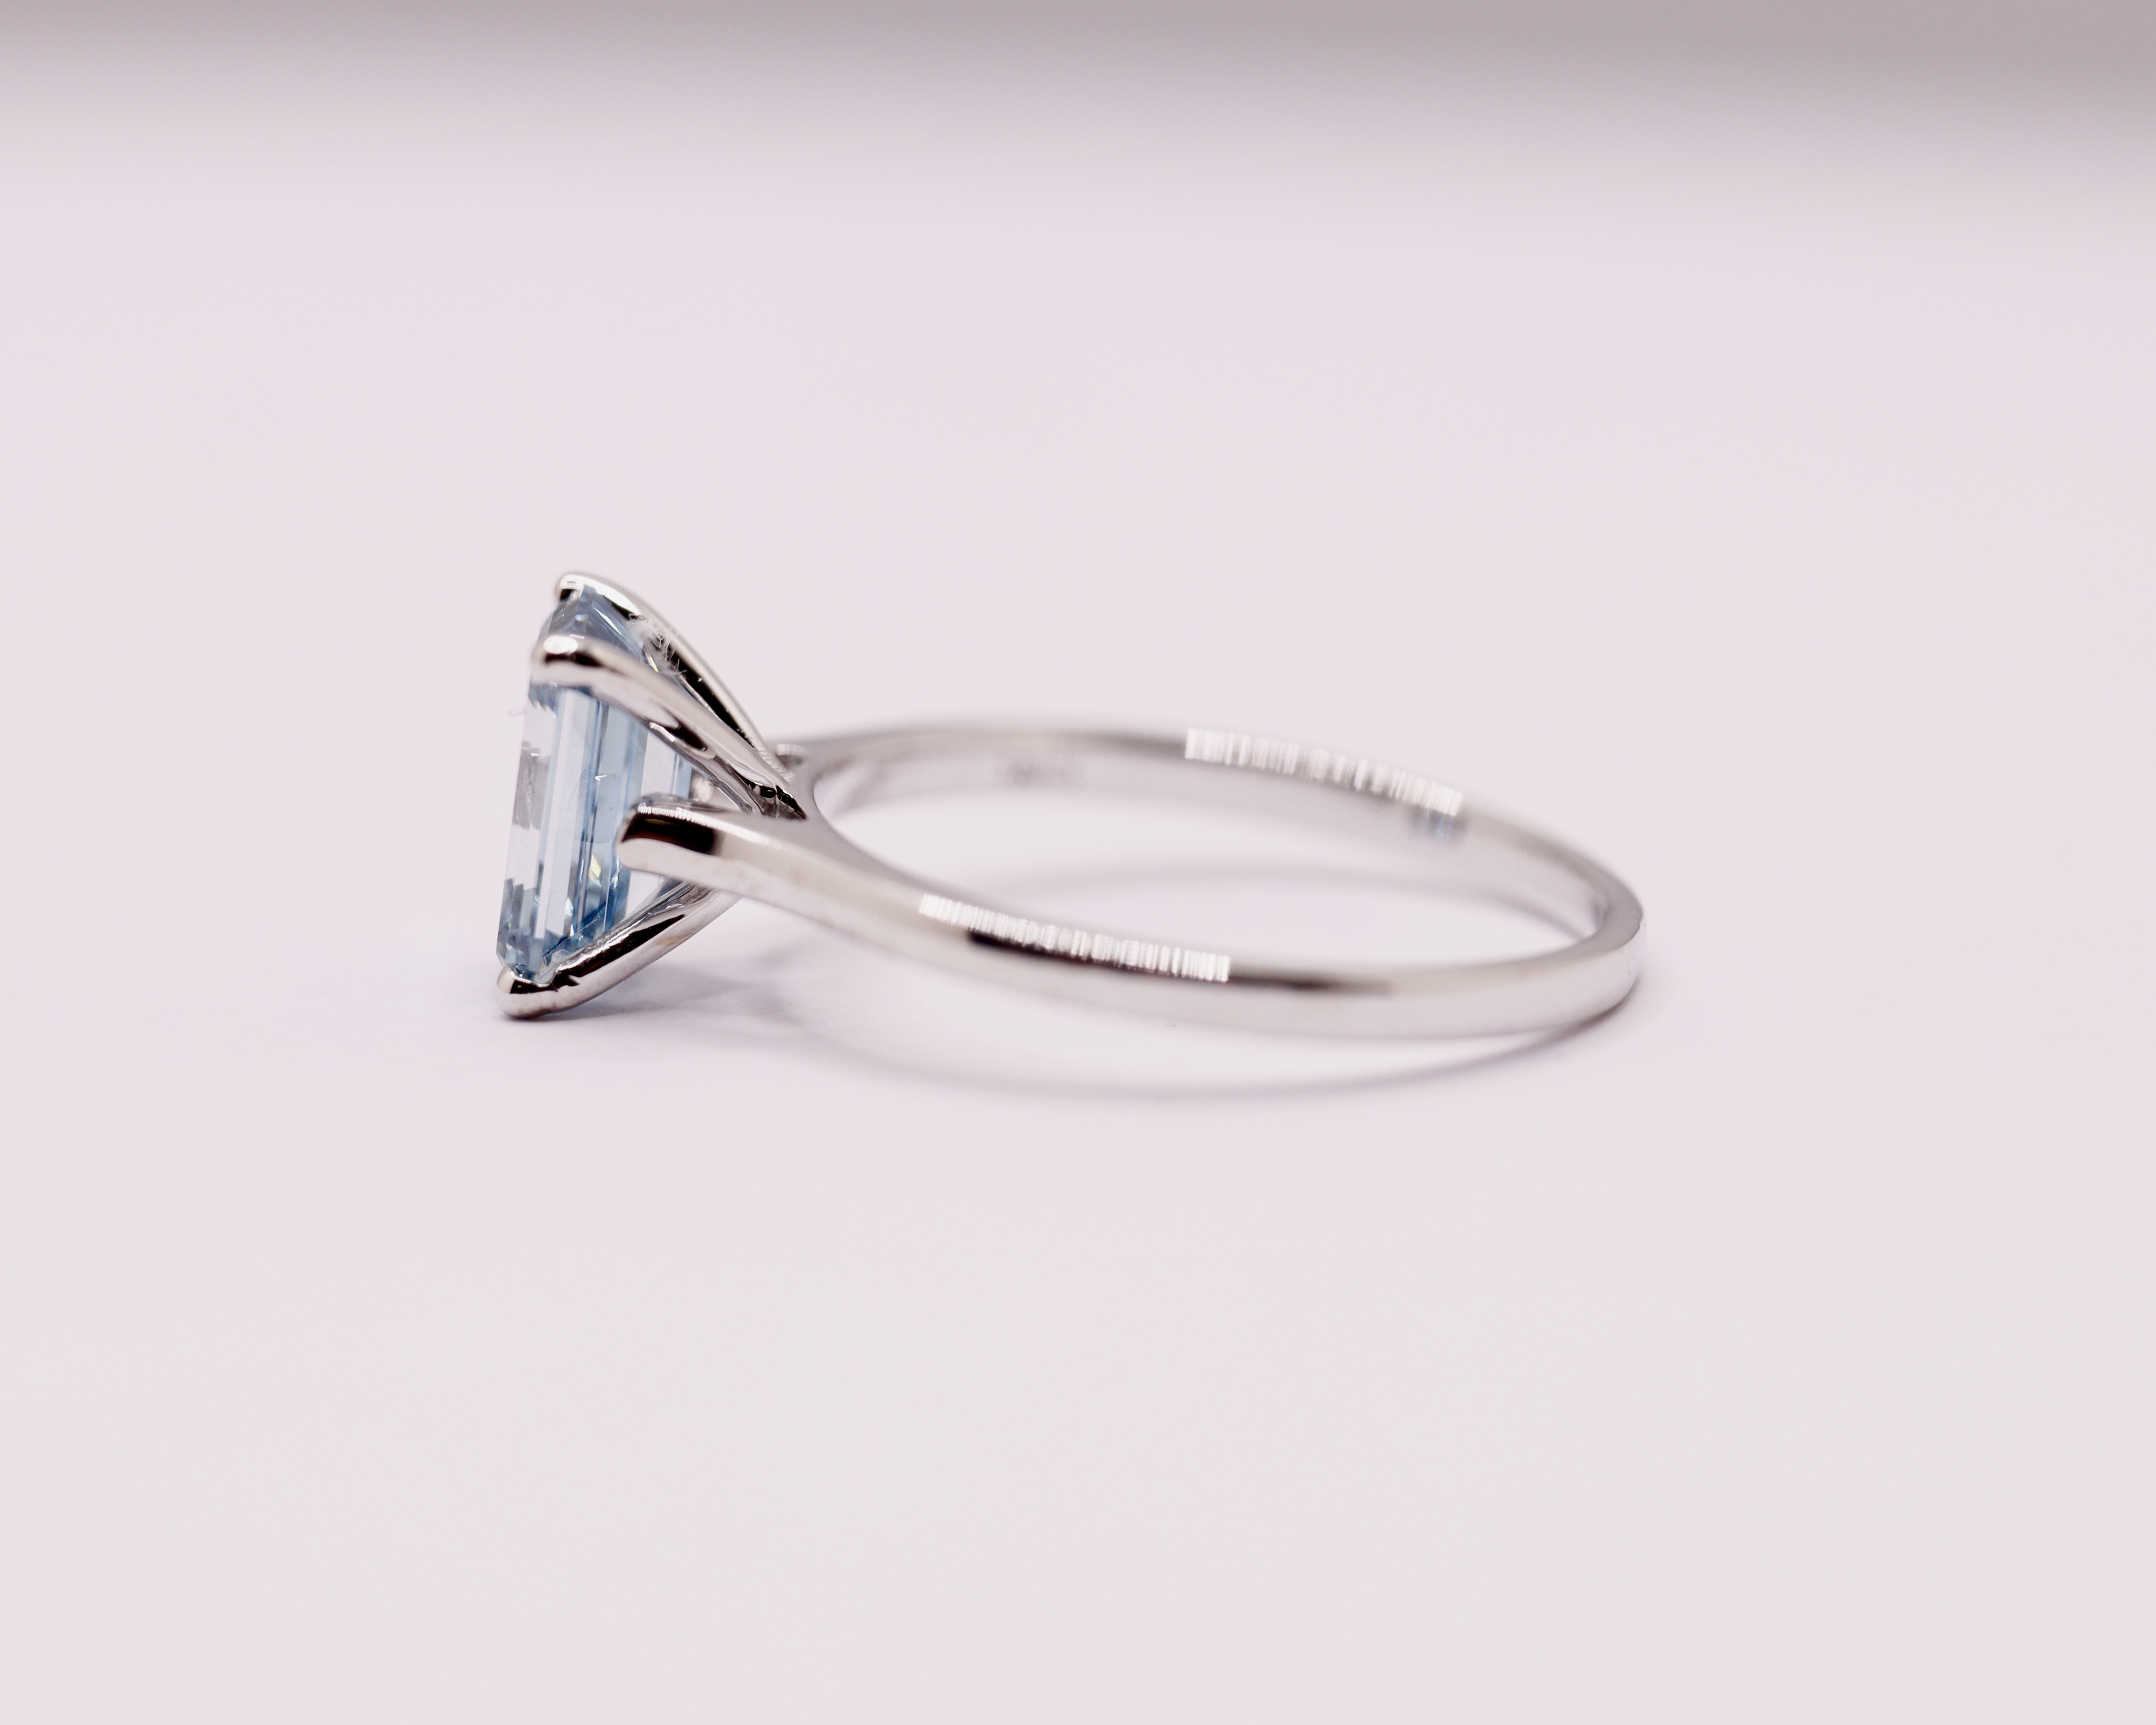 ** ON SALE ** Fancy Blue Emerald Cut 1.50 Carat Diamond 18Kt White Gold Ring -VS1 Clarity - Image 3 of 7